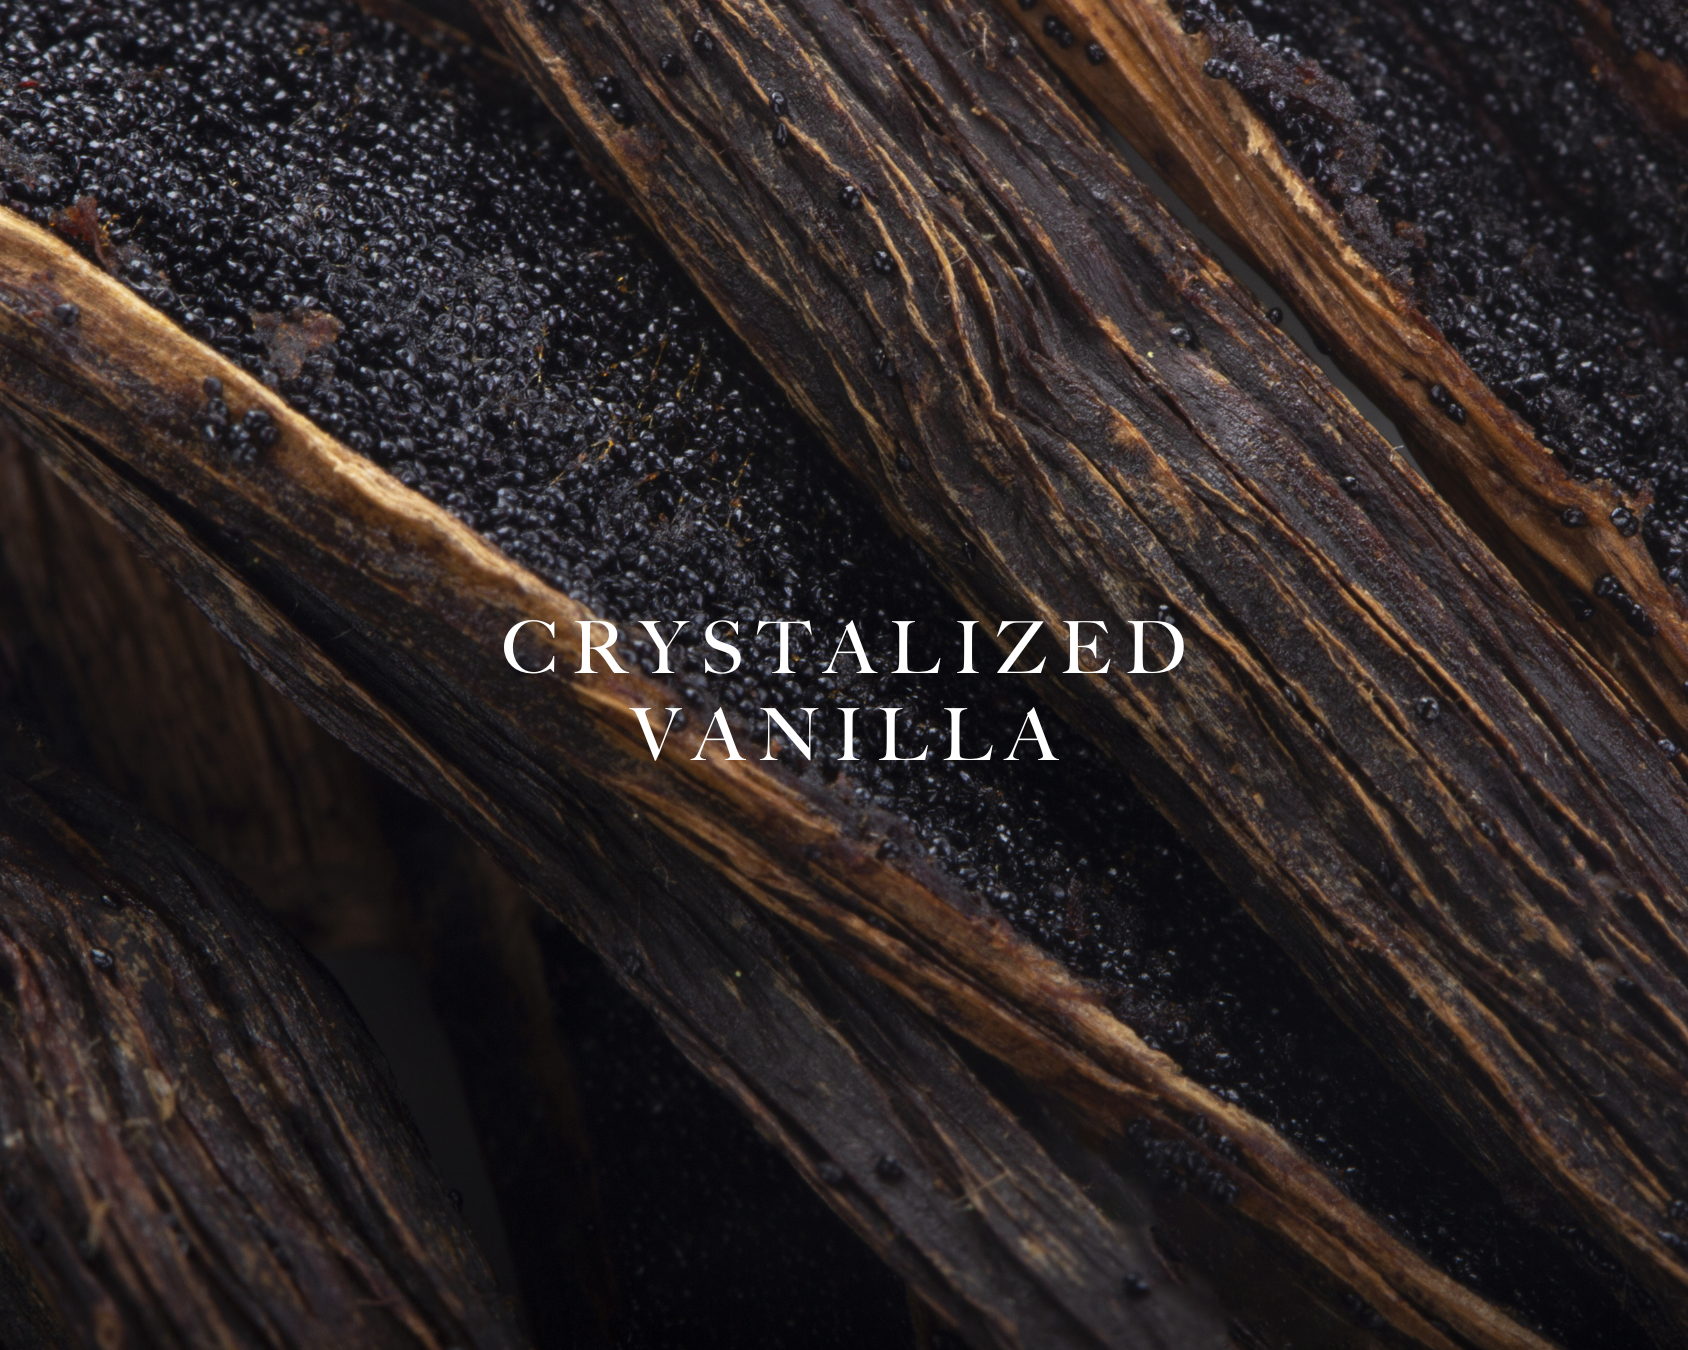 Crystalized Vanilla bean pods